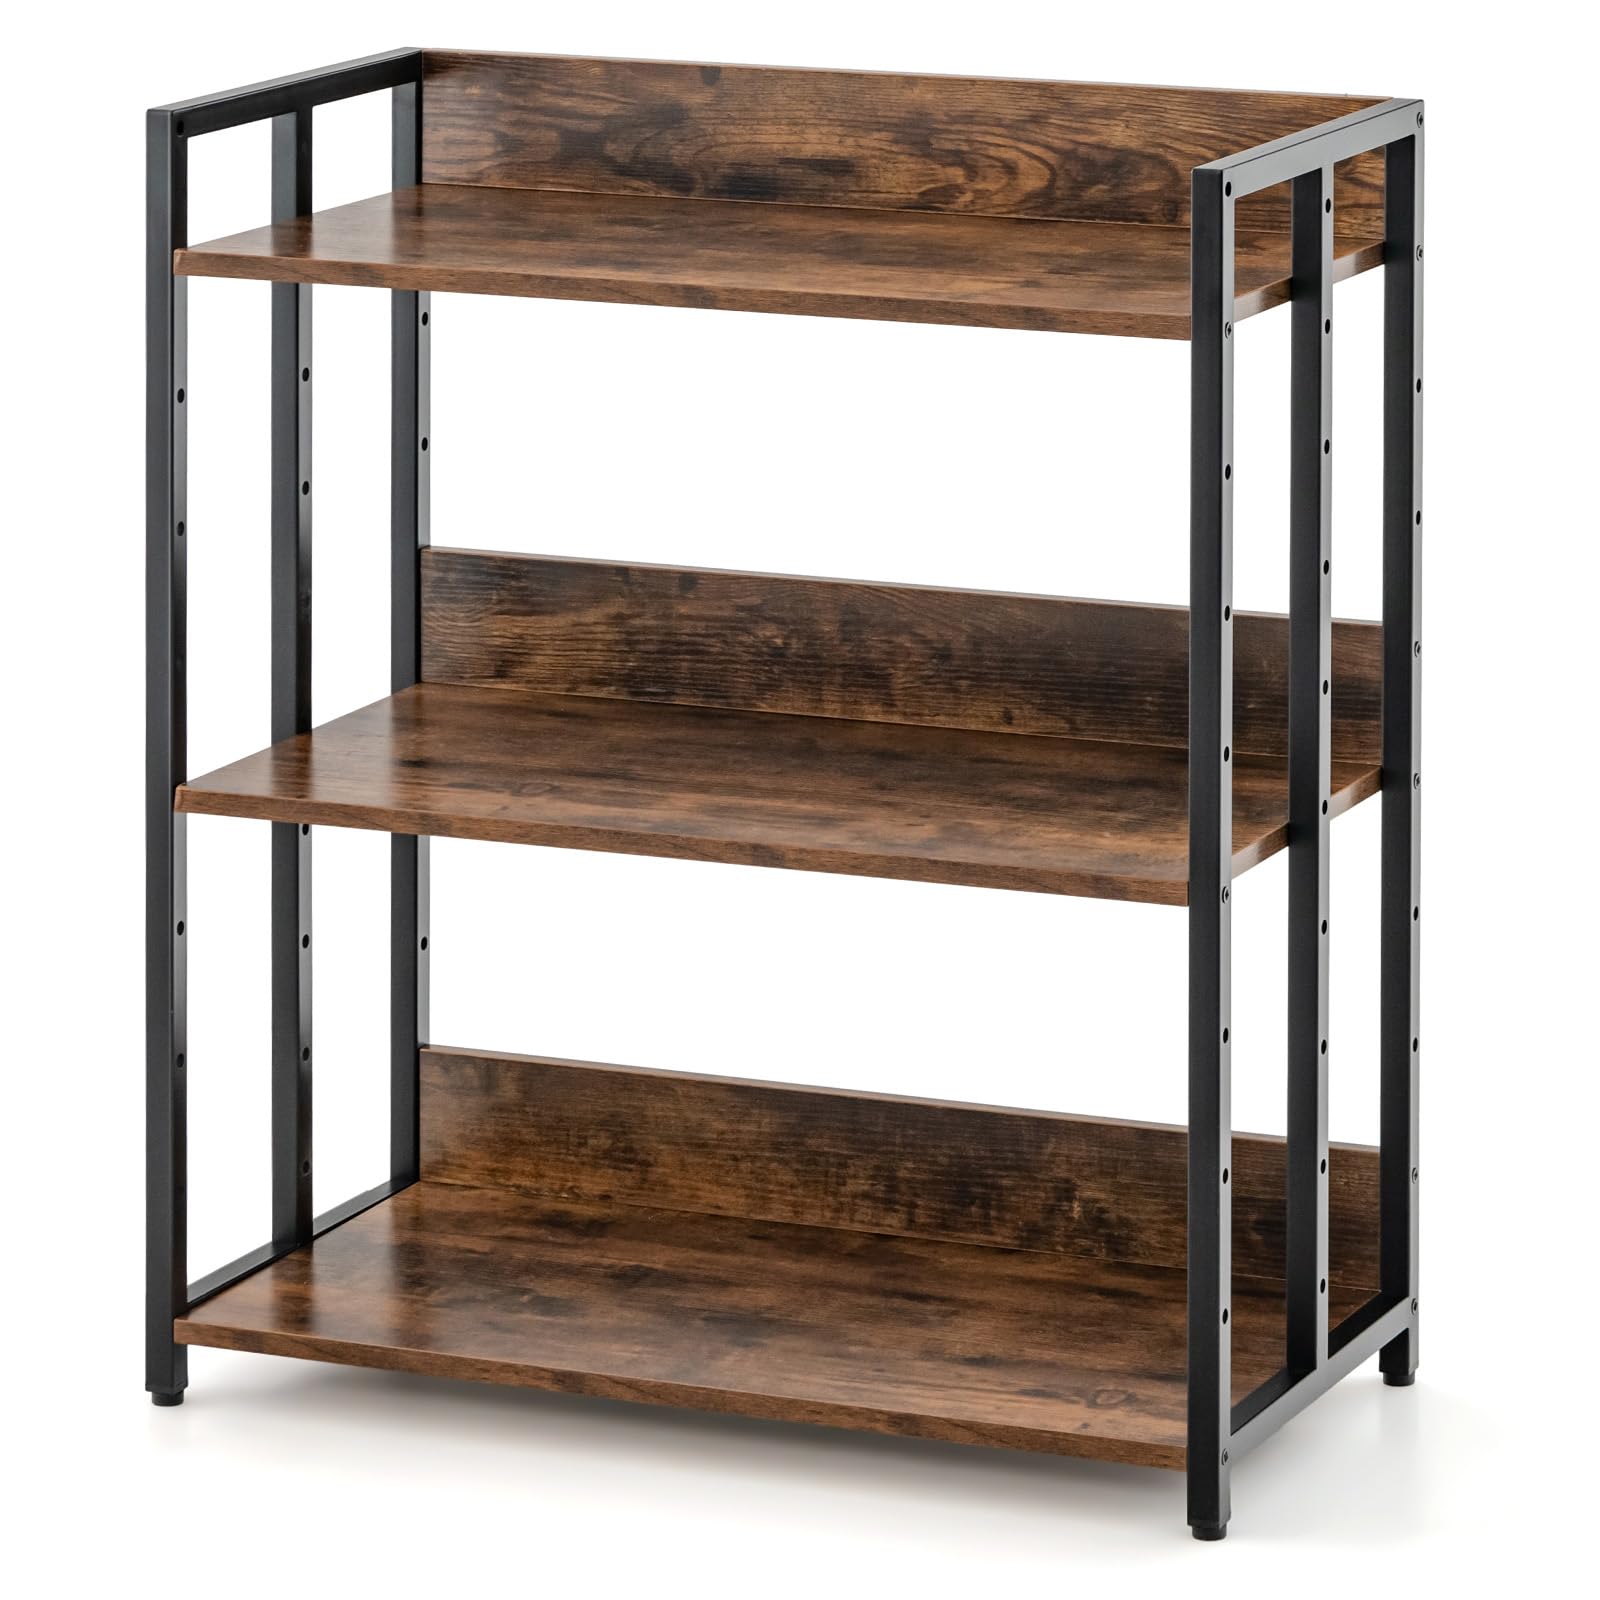 Giantex 3-Tier Bookshelf, Industrial 32" Tall Small Book Shelf with Adjustable Shelves